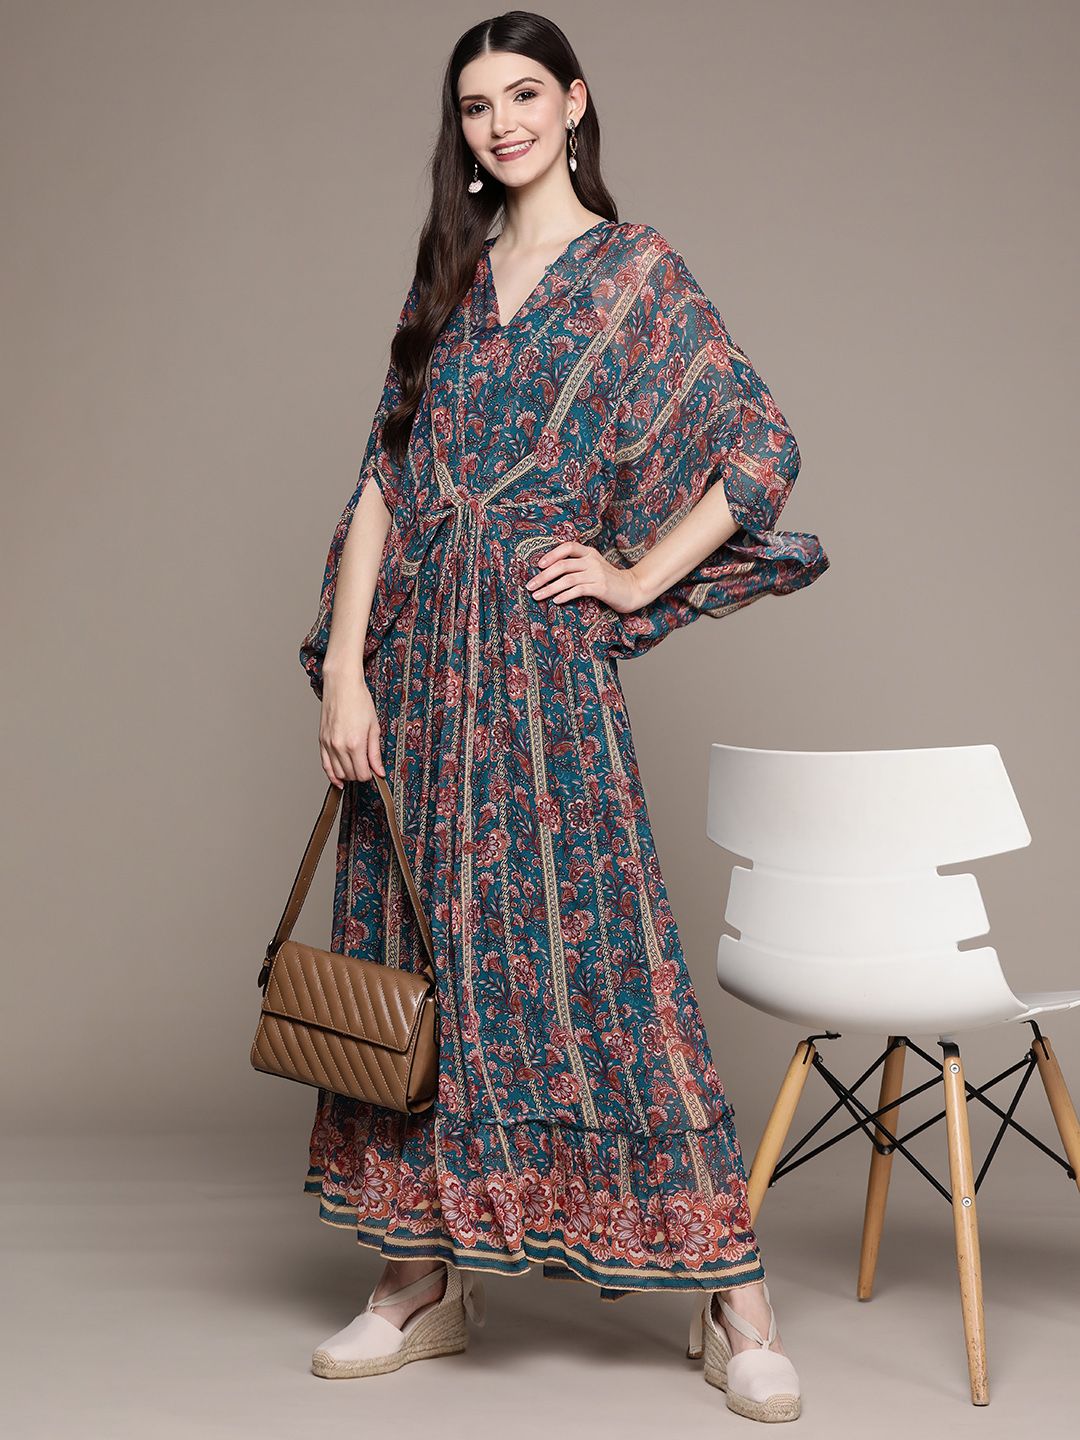 aarke Ritu Kumar Teal & Maroon Ethnic Motifs Georgette Maxi Dress Price in India